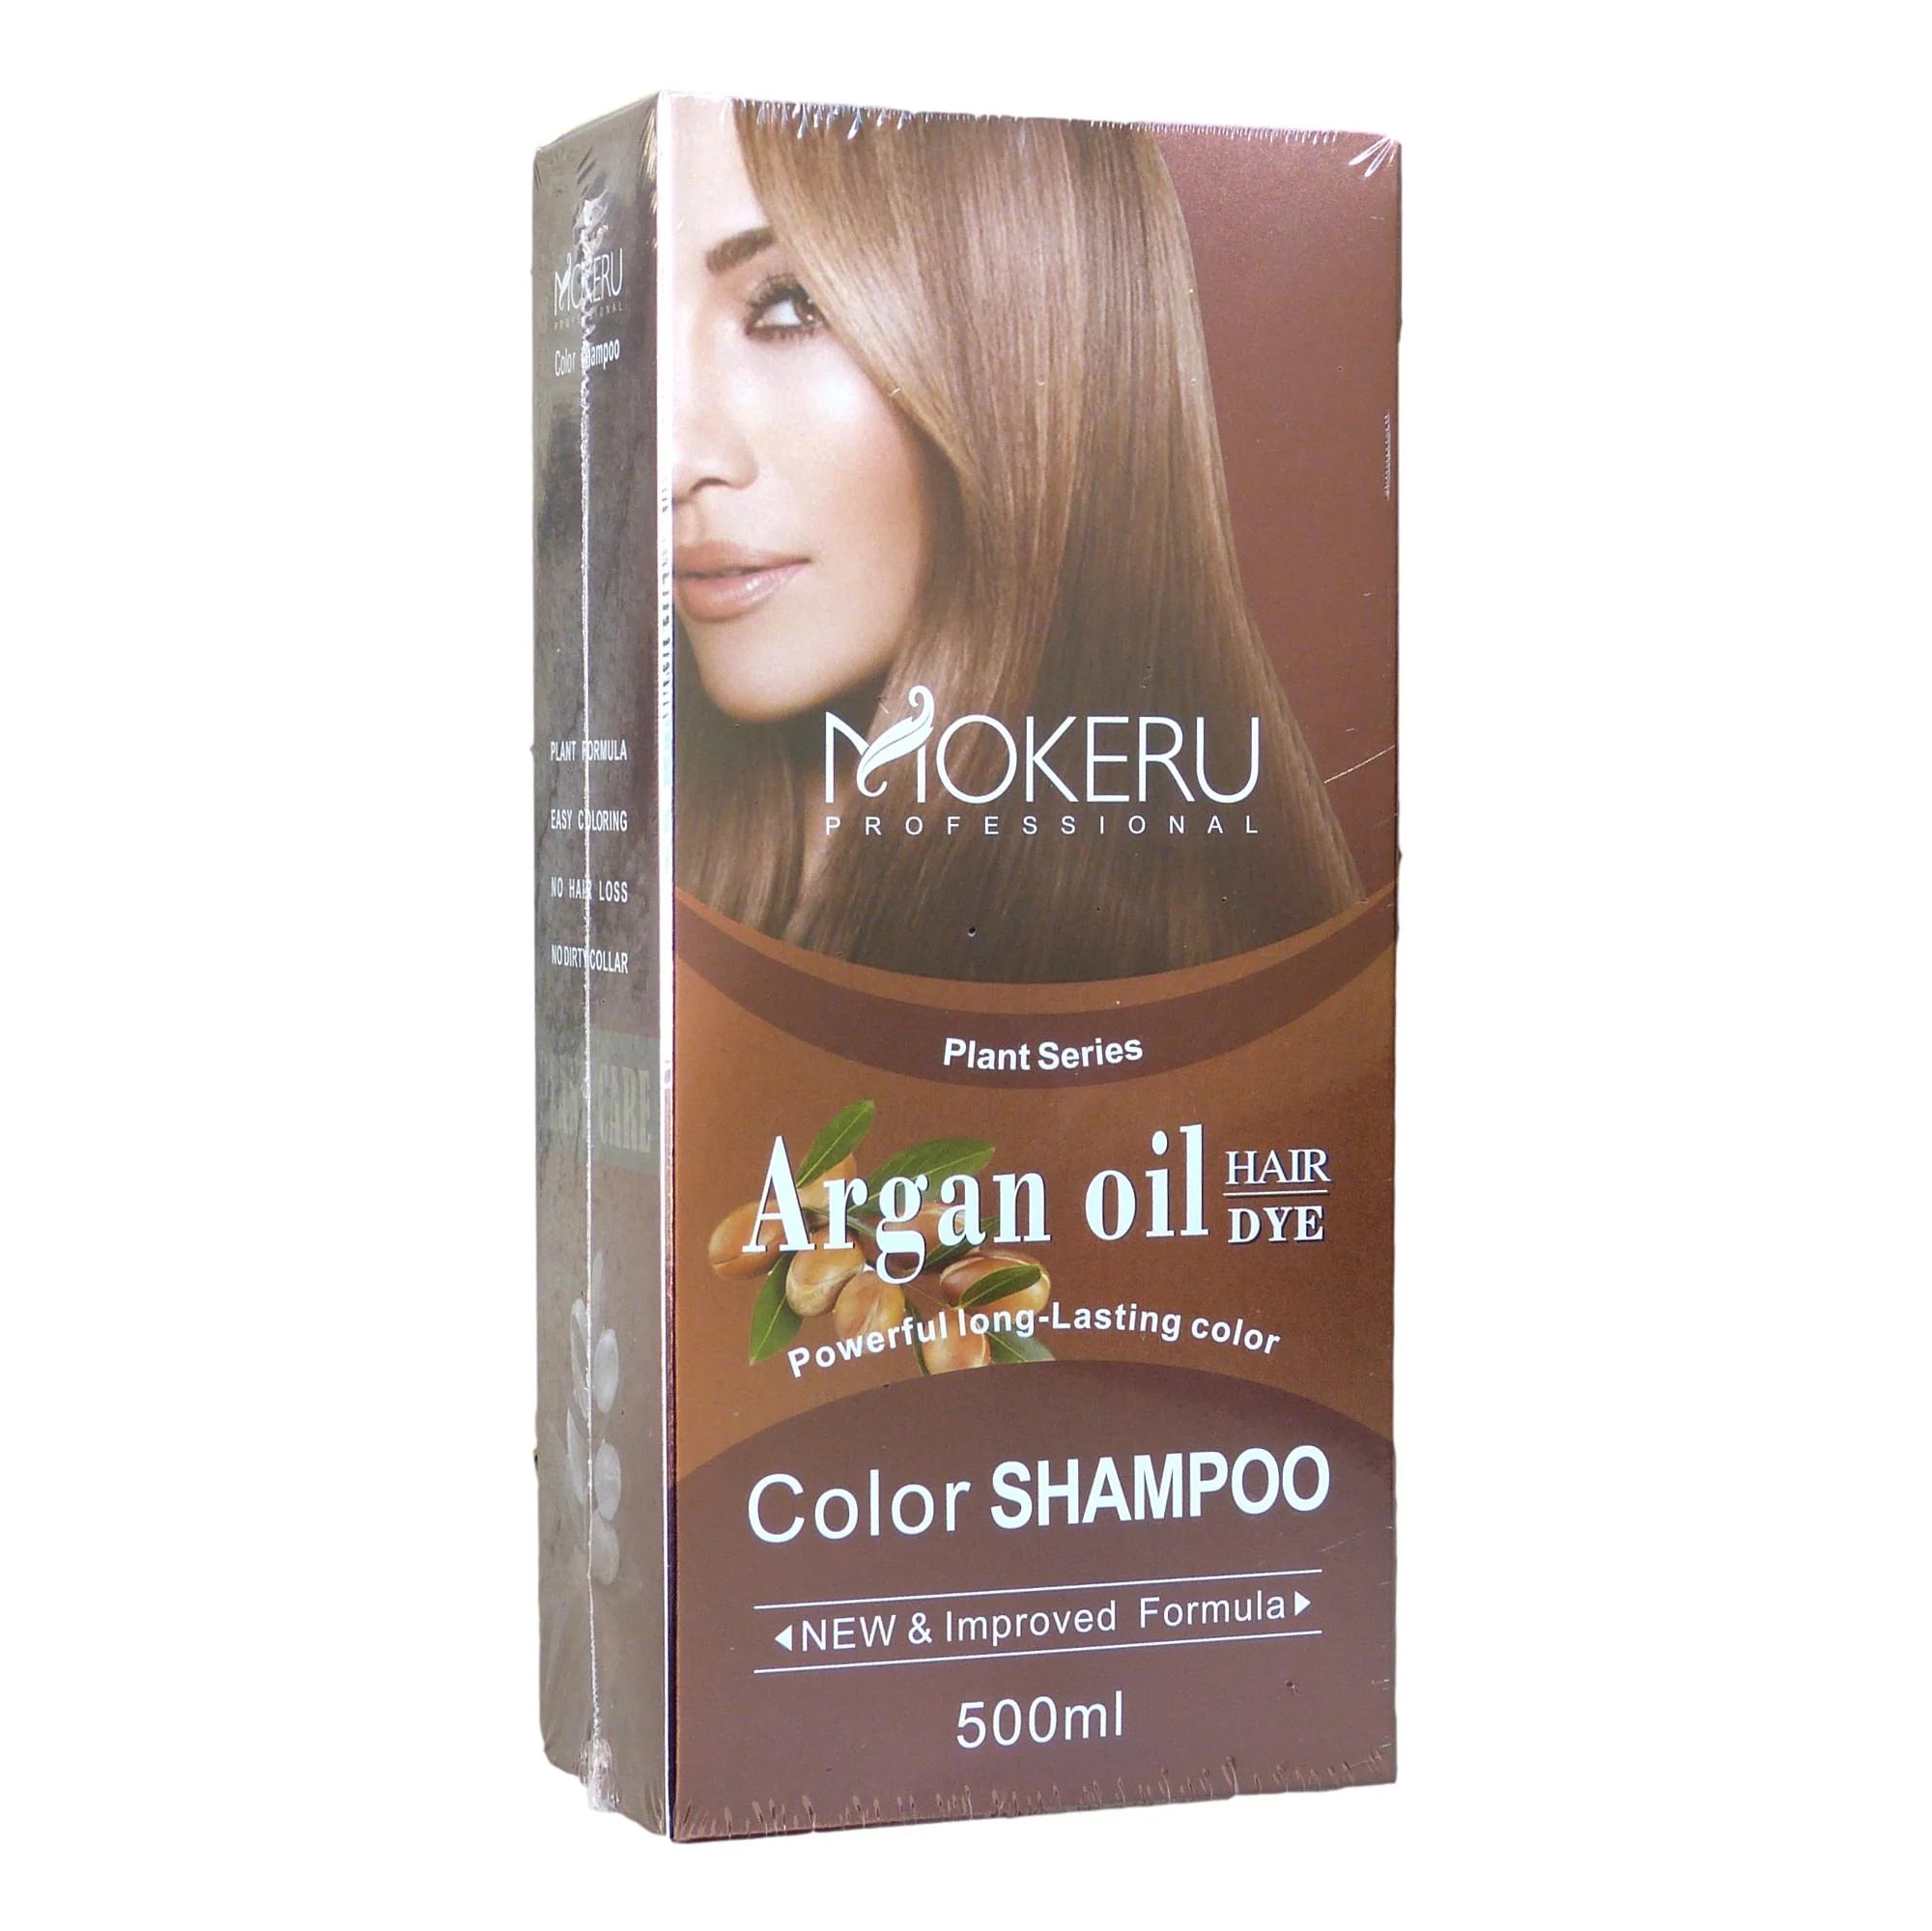 Mokeru Argan Oil Hair Dye Color Shampoo 500ml